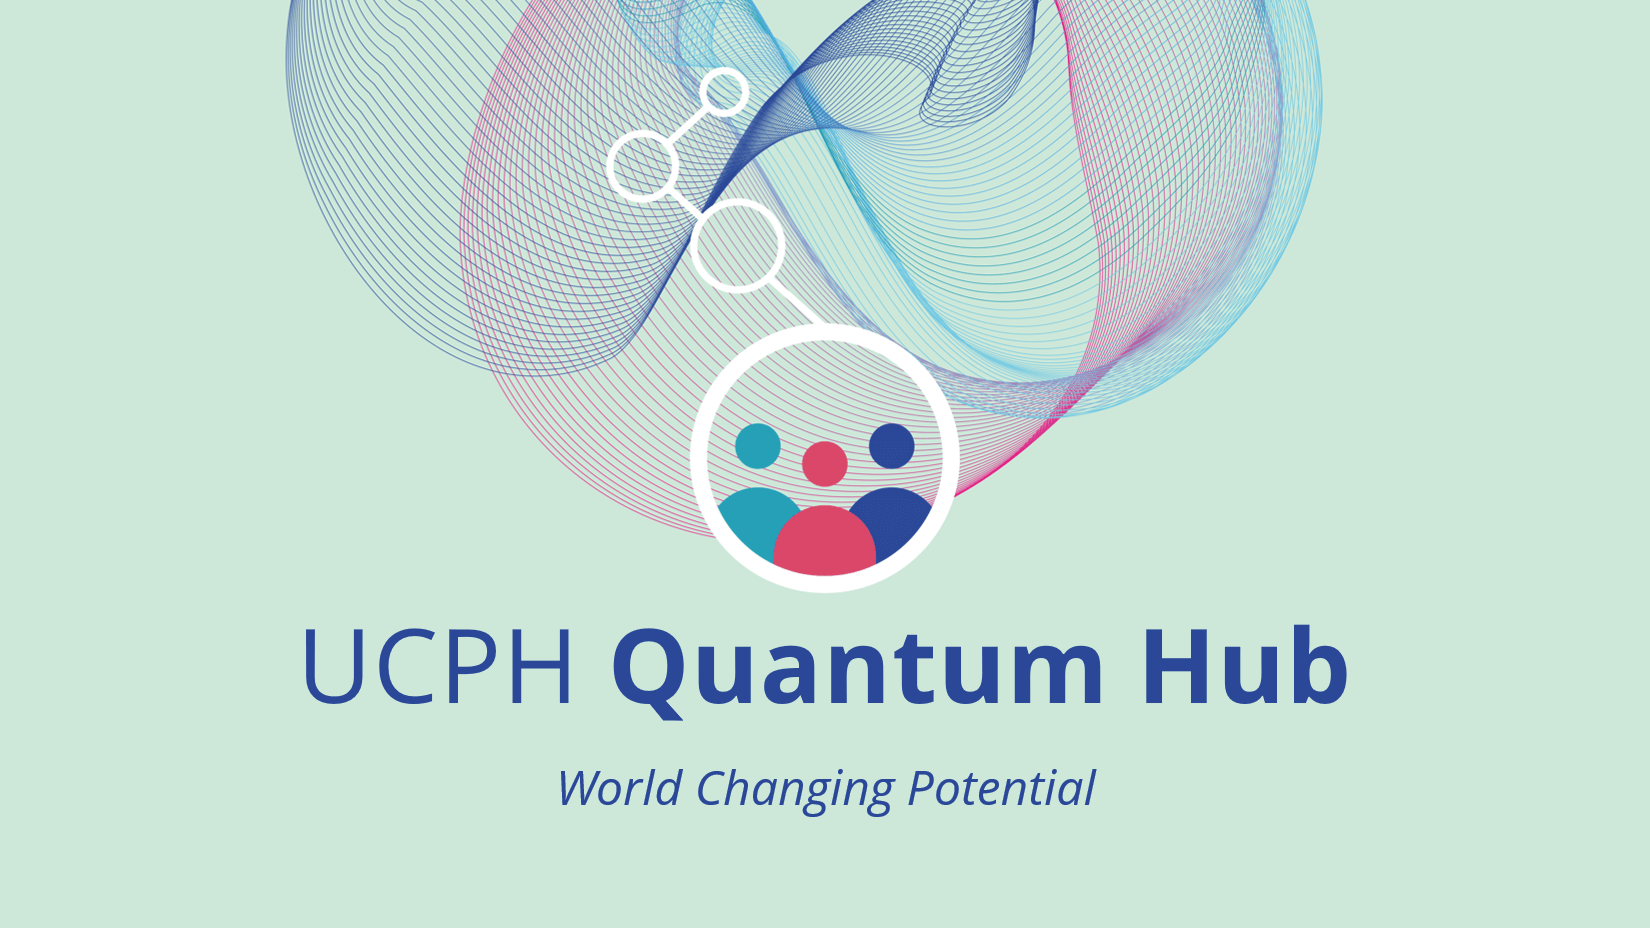 UCPH Quantum Hub: World Changing Potential